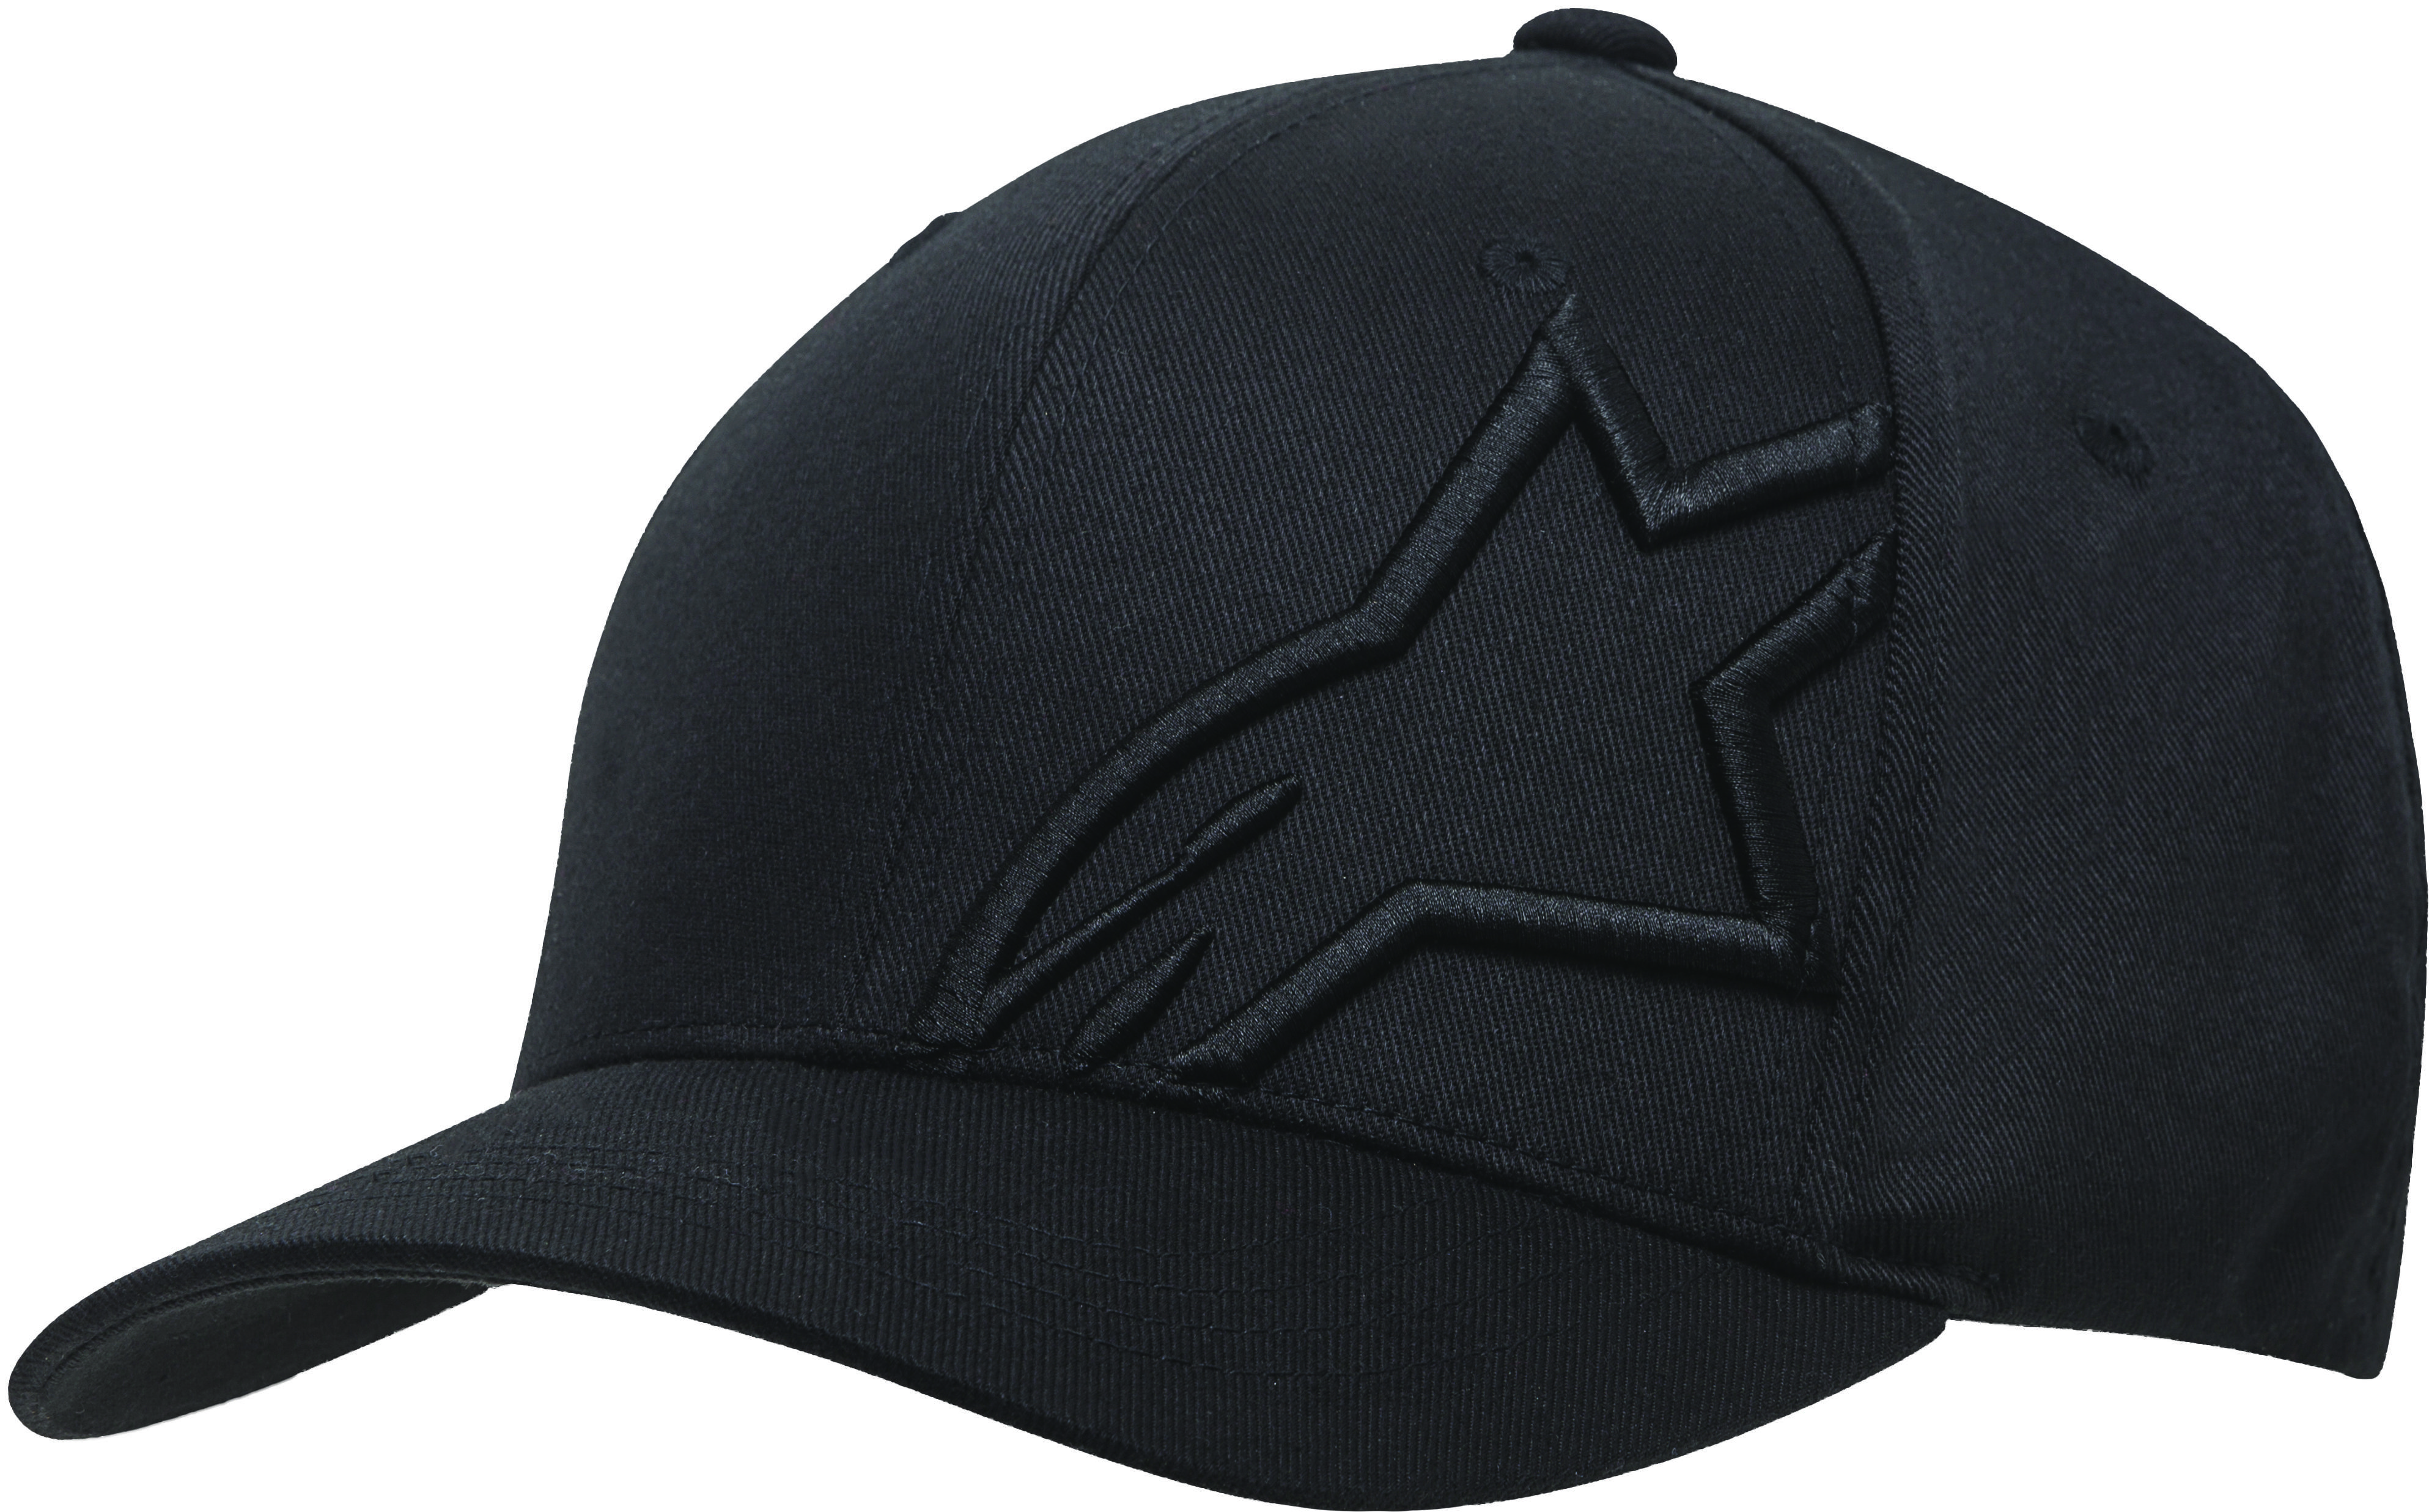 Corporate Shift 2 Curved Brim Hat Black/Black Small/Medium - Click Image to Close